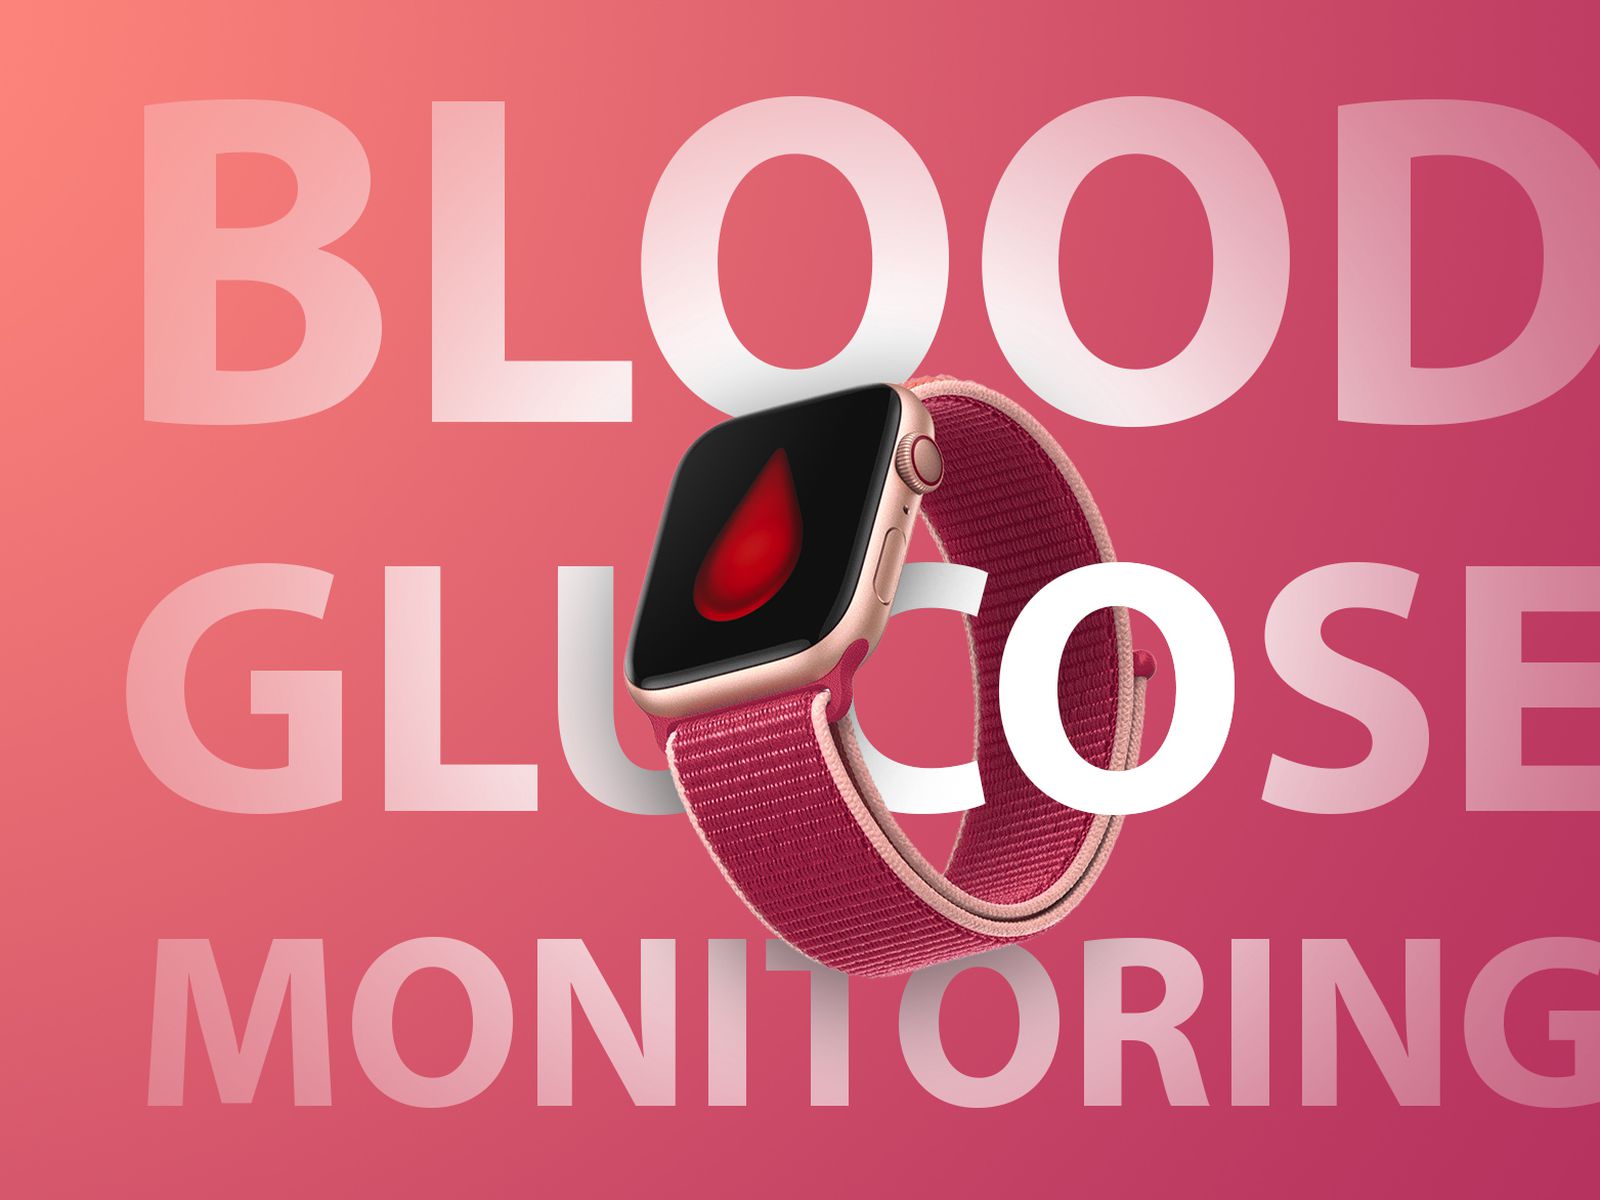 https://images.macrumors.com/t/ZWO2CXuLkyKIKrPiJubyDkFYoxM=/1600x1200/smart/article-new/2021/01/apple-watch-blood-glucose-feature.jpg